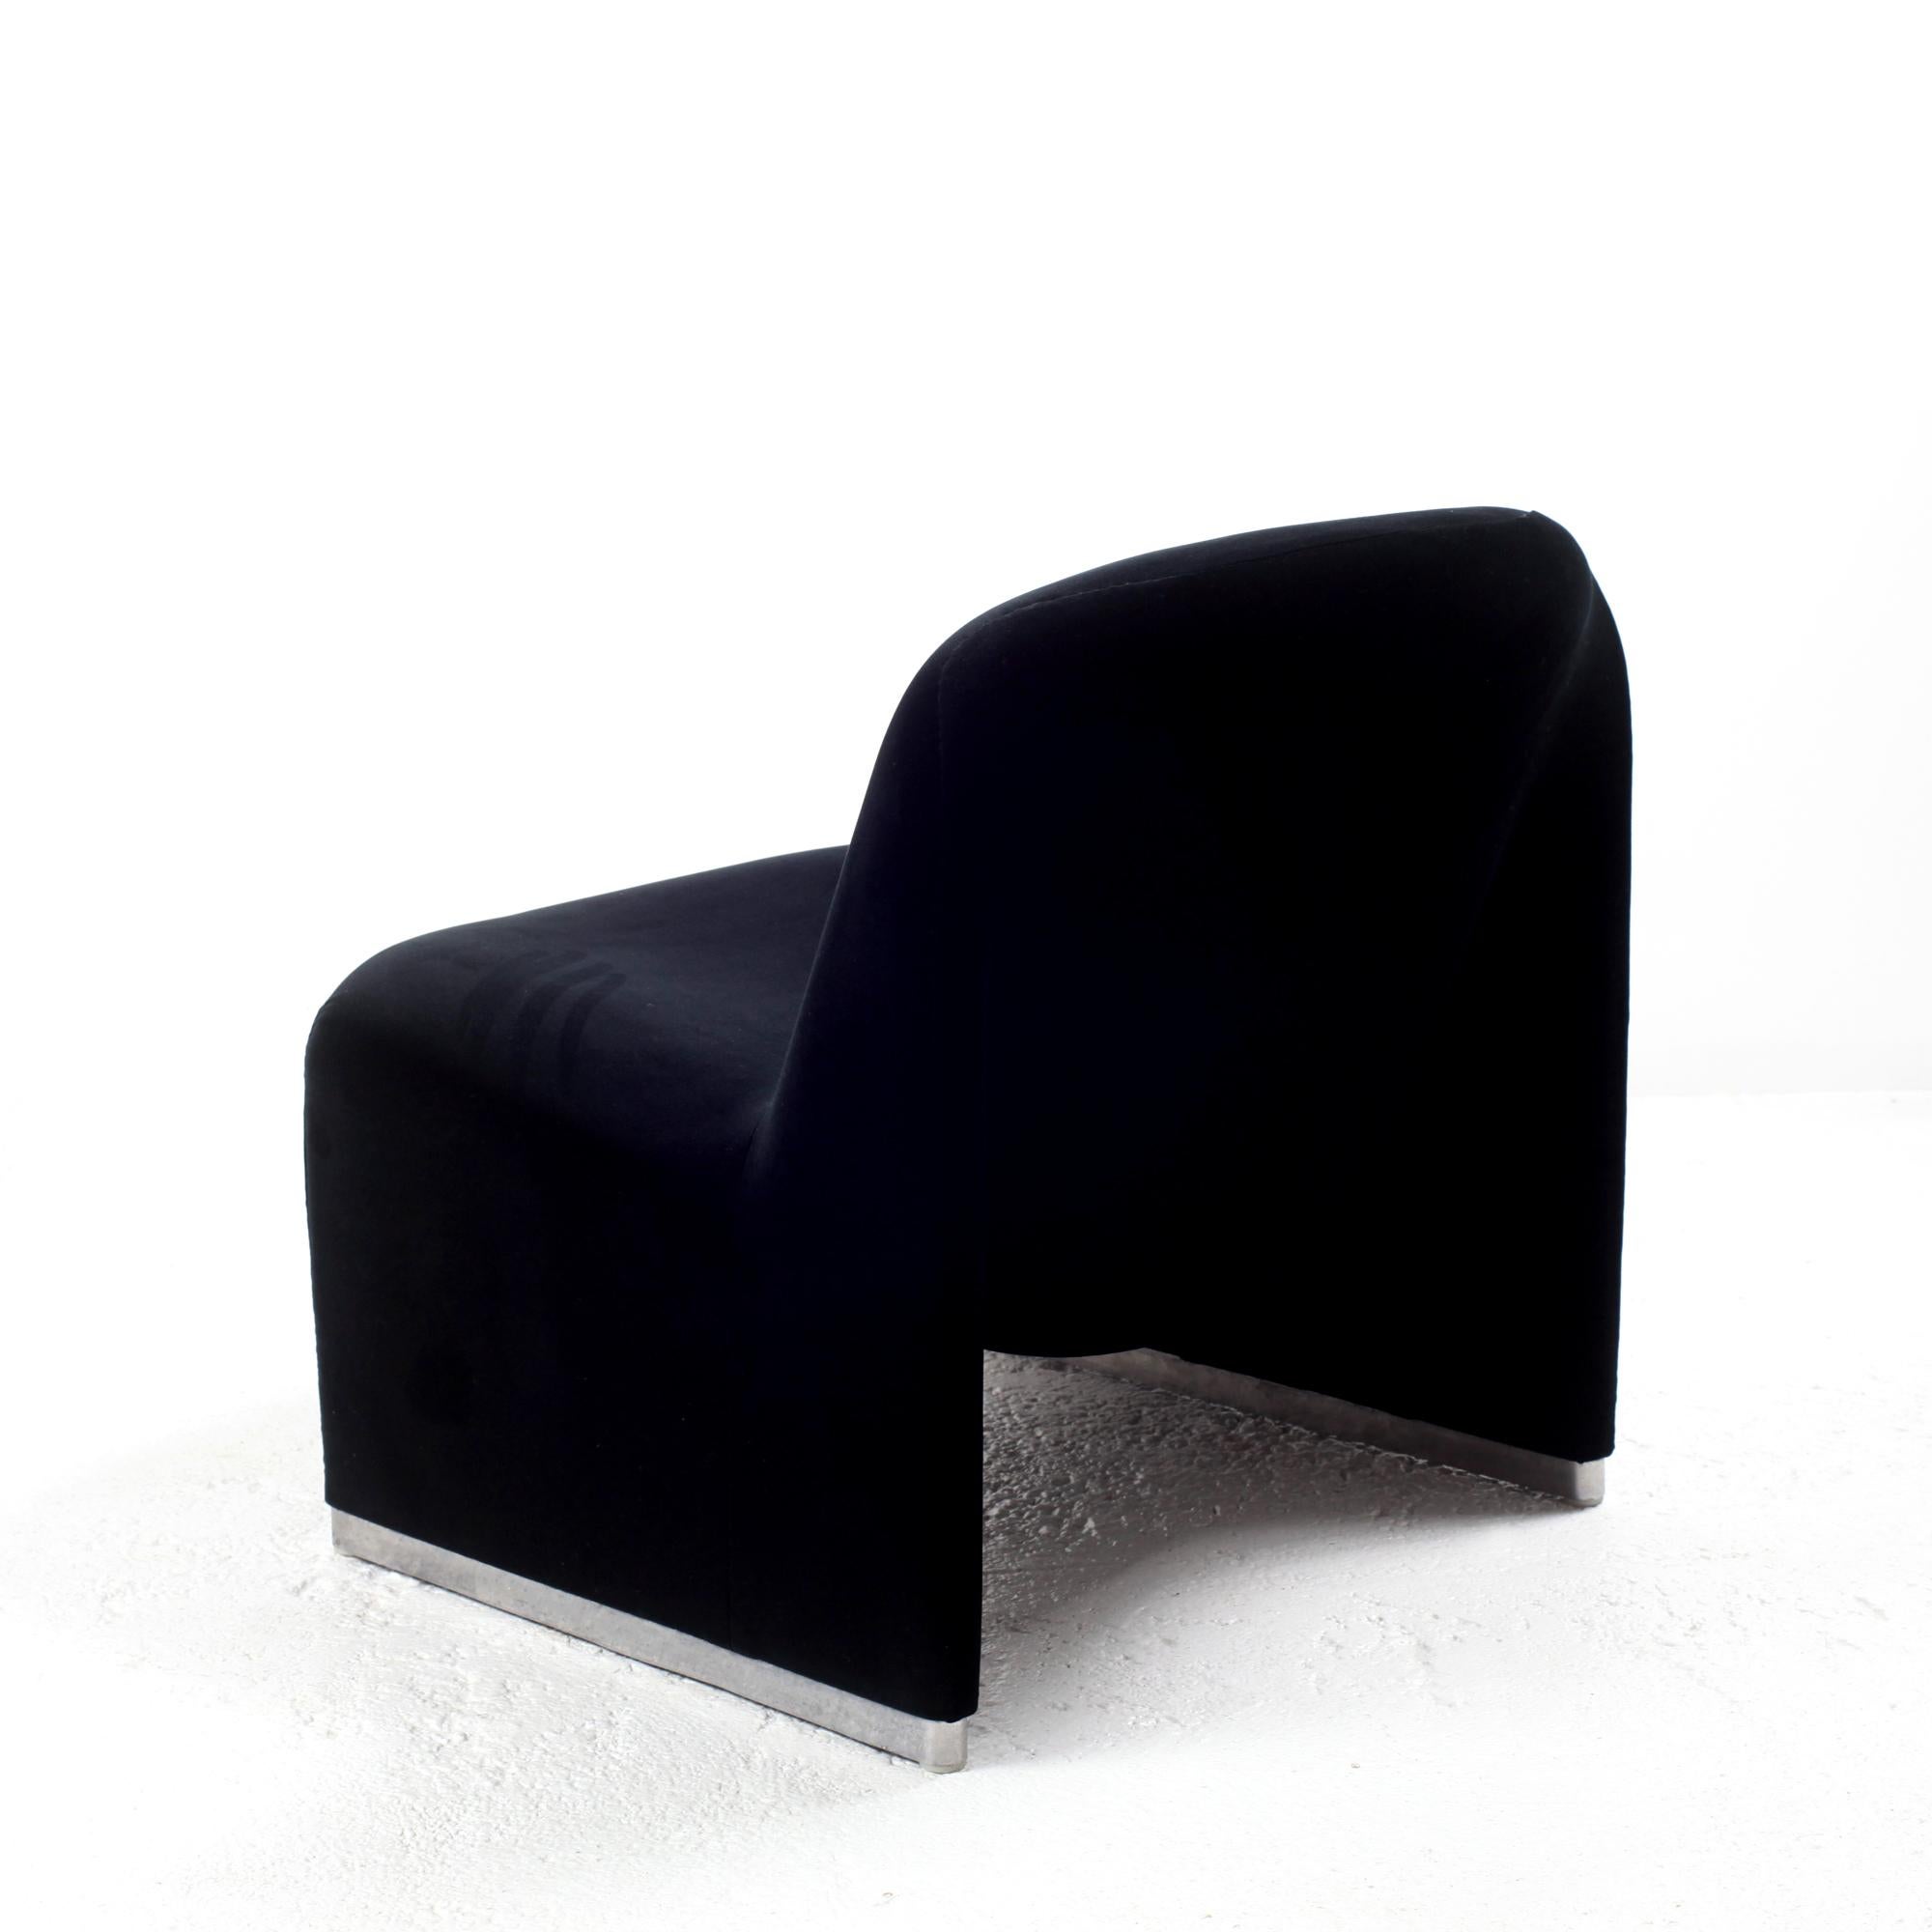 Mid-Century Modern Giancarlo Piretti “Alky” Chair in New Black Velvet, for Castelli Italy, 1970s